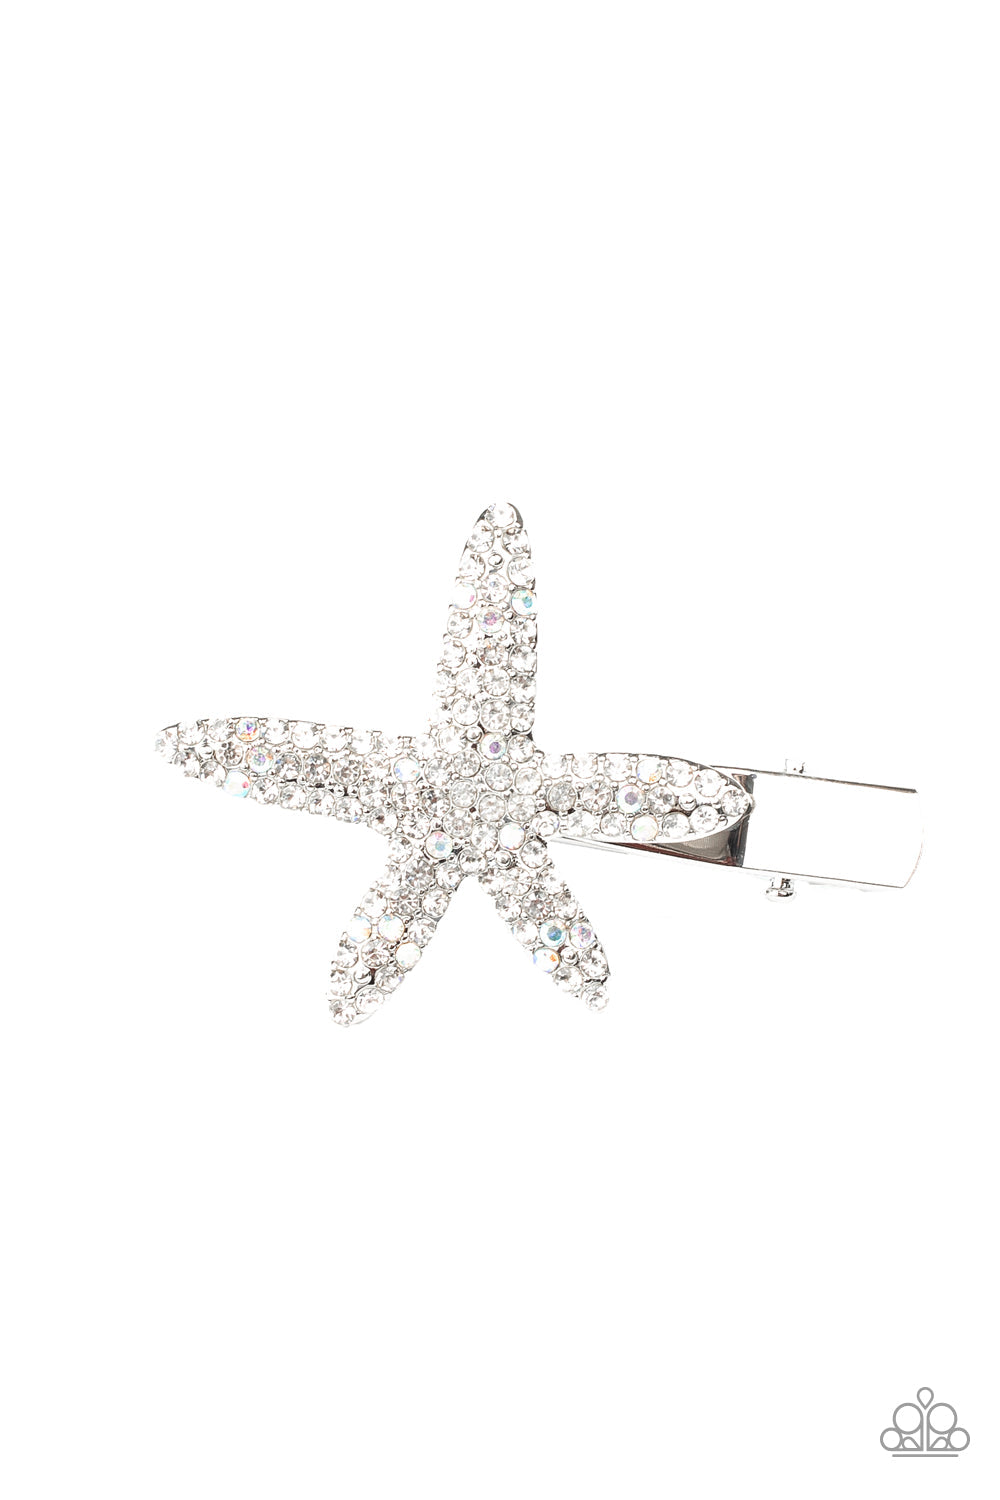 Paparazzi Wish On a STARFISH - White Rhinestones - Hair Clip - $5 Jewelry with Ashley Swint